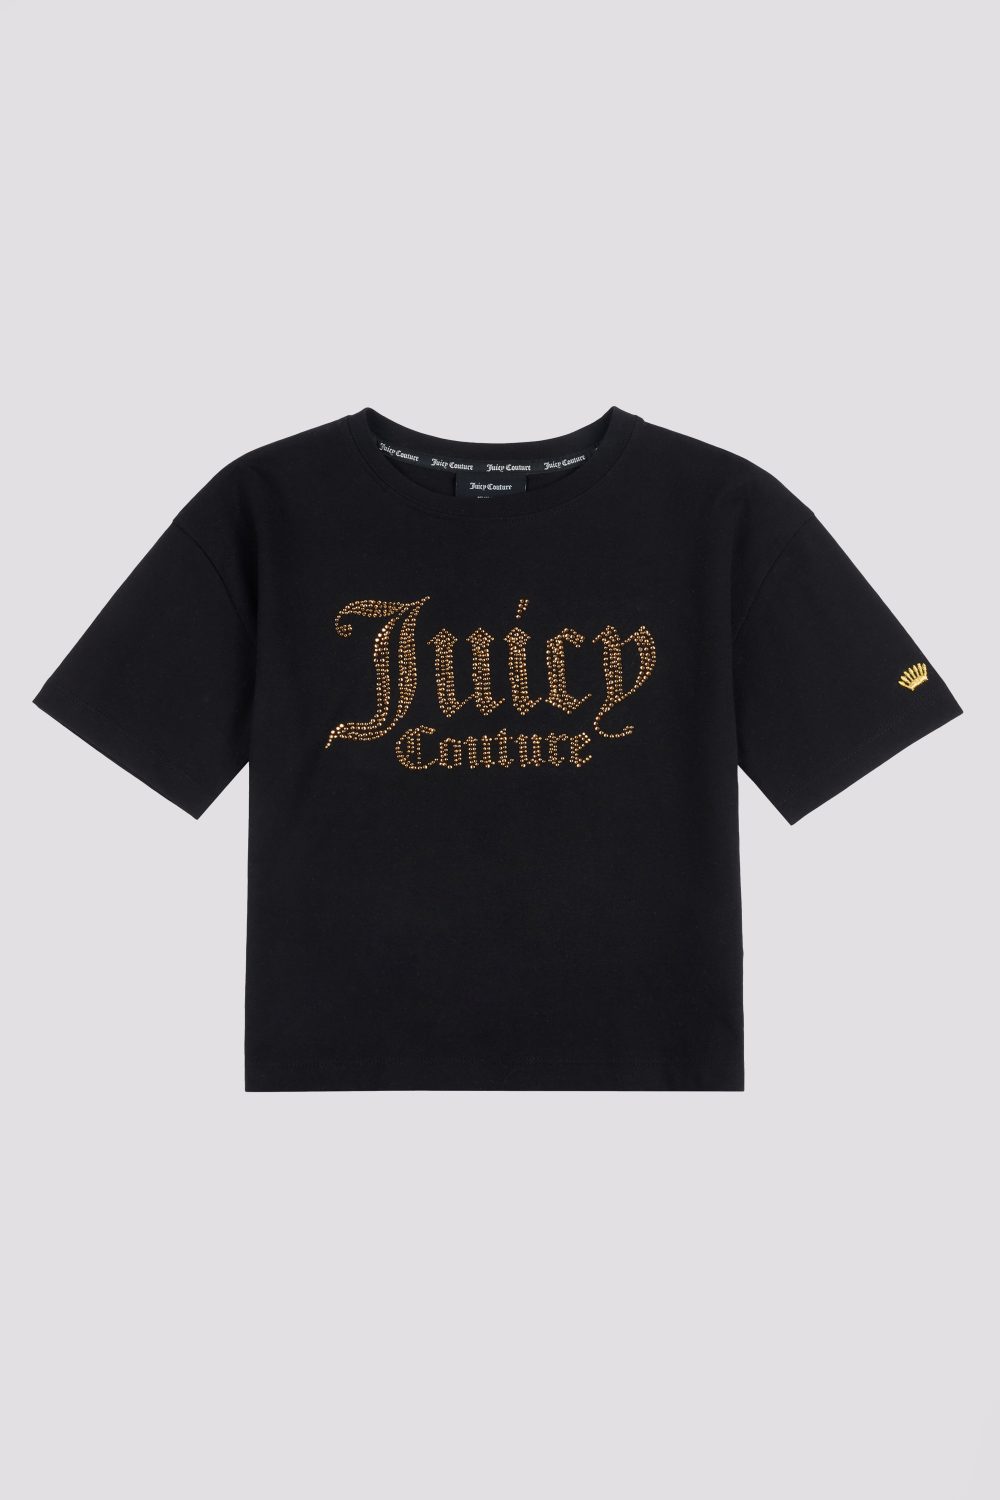 JUICY COUTURE Black Rhinestone Logo T-Shirt